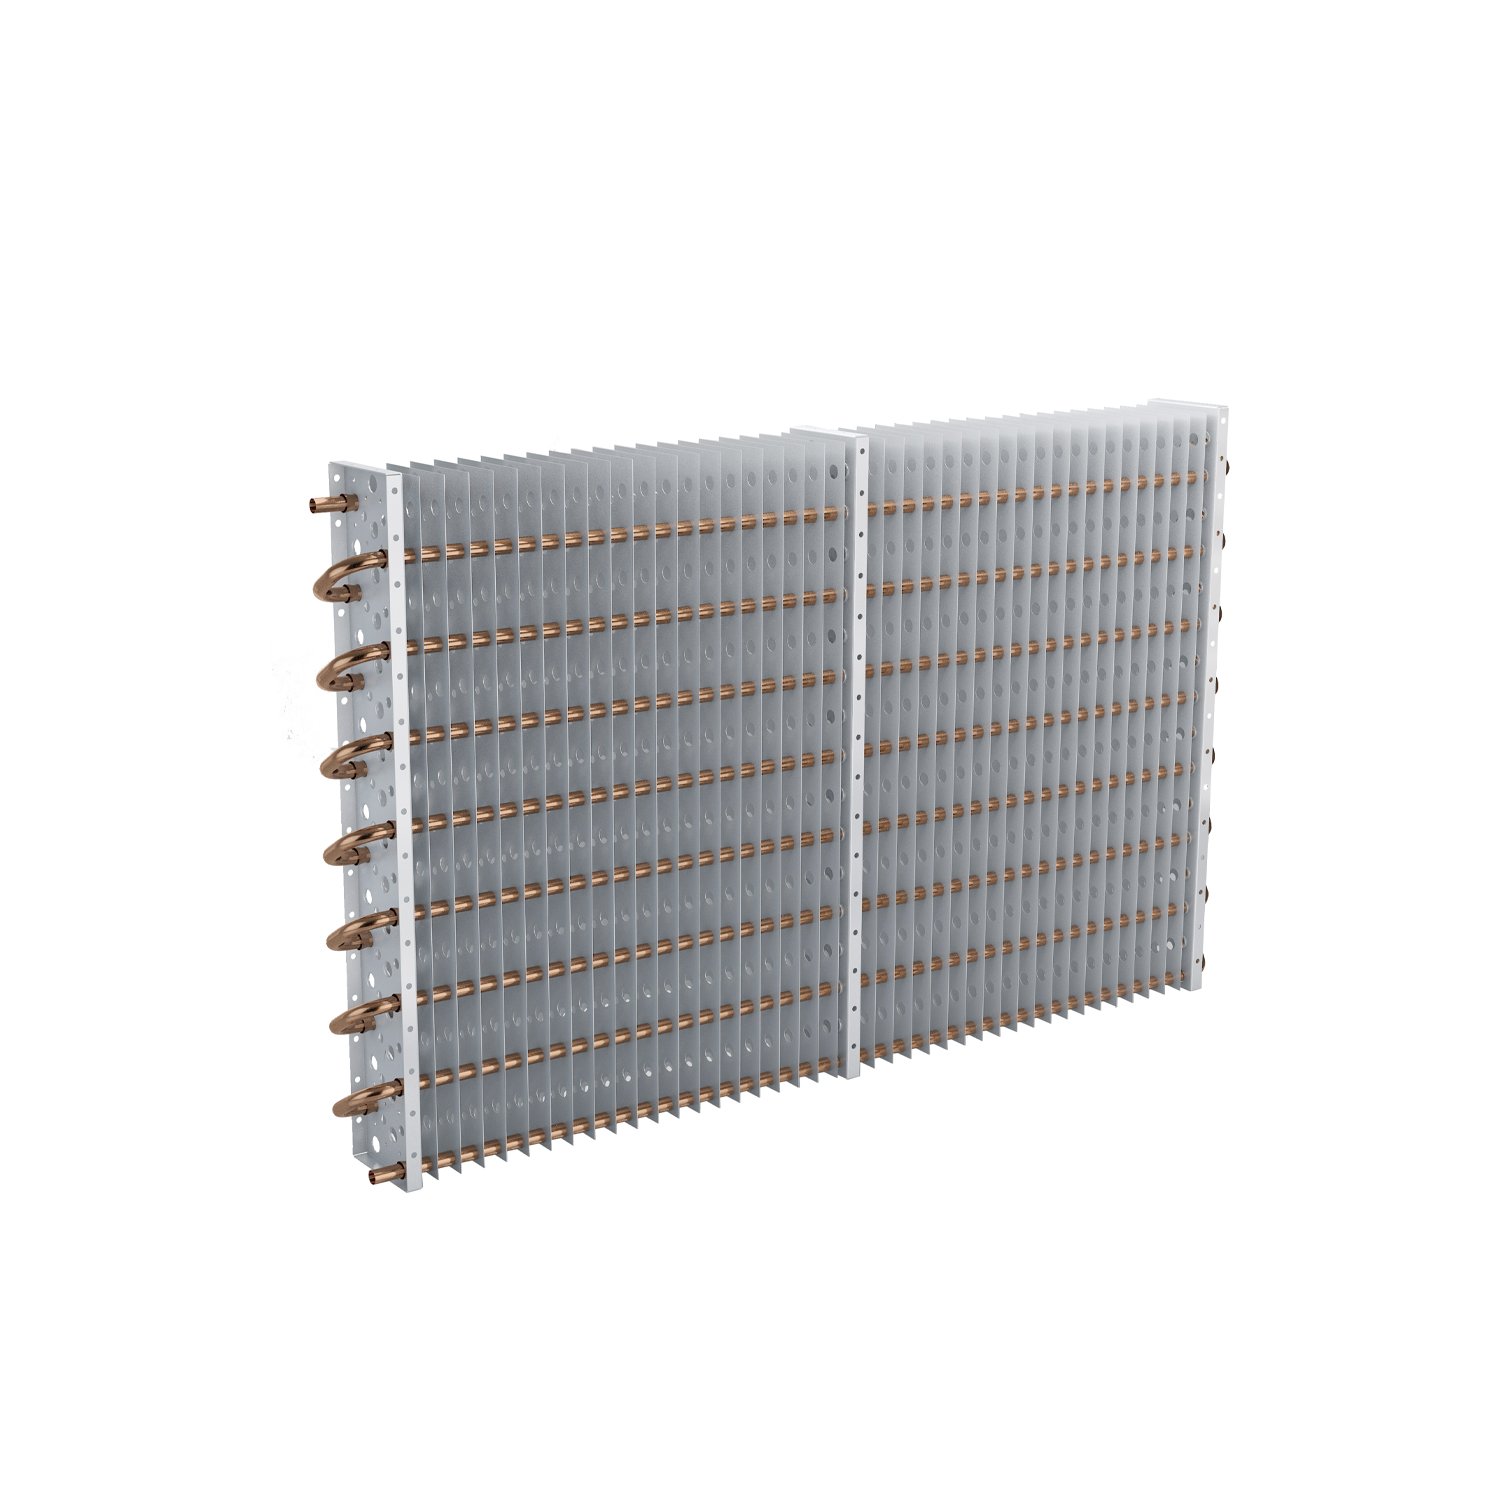 Drip tray for evaporator REC09060, 640 x 685 x 250 x 1000